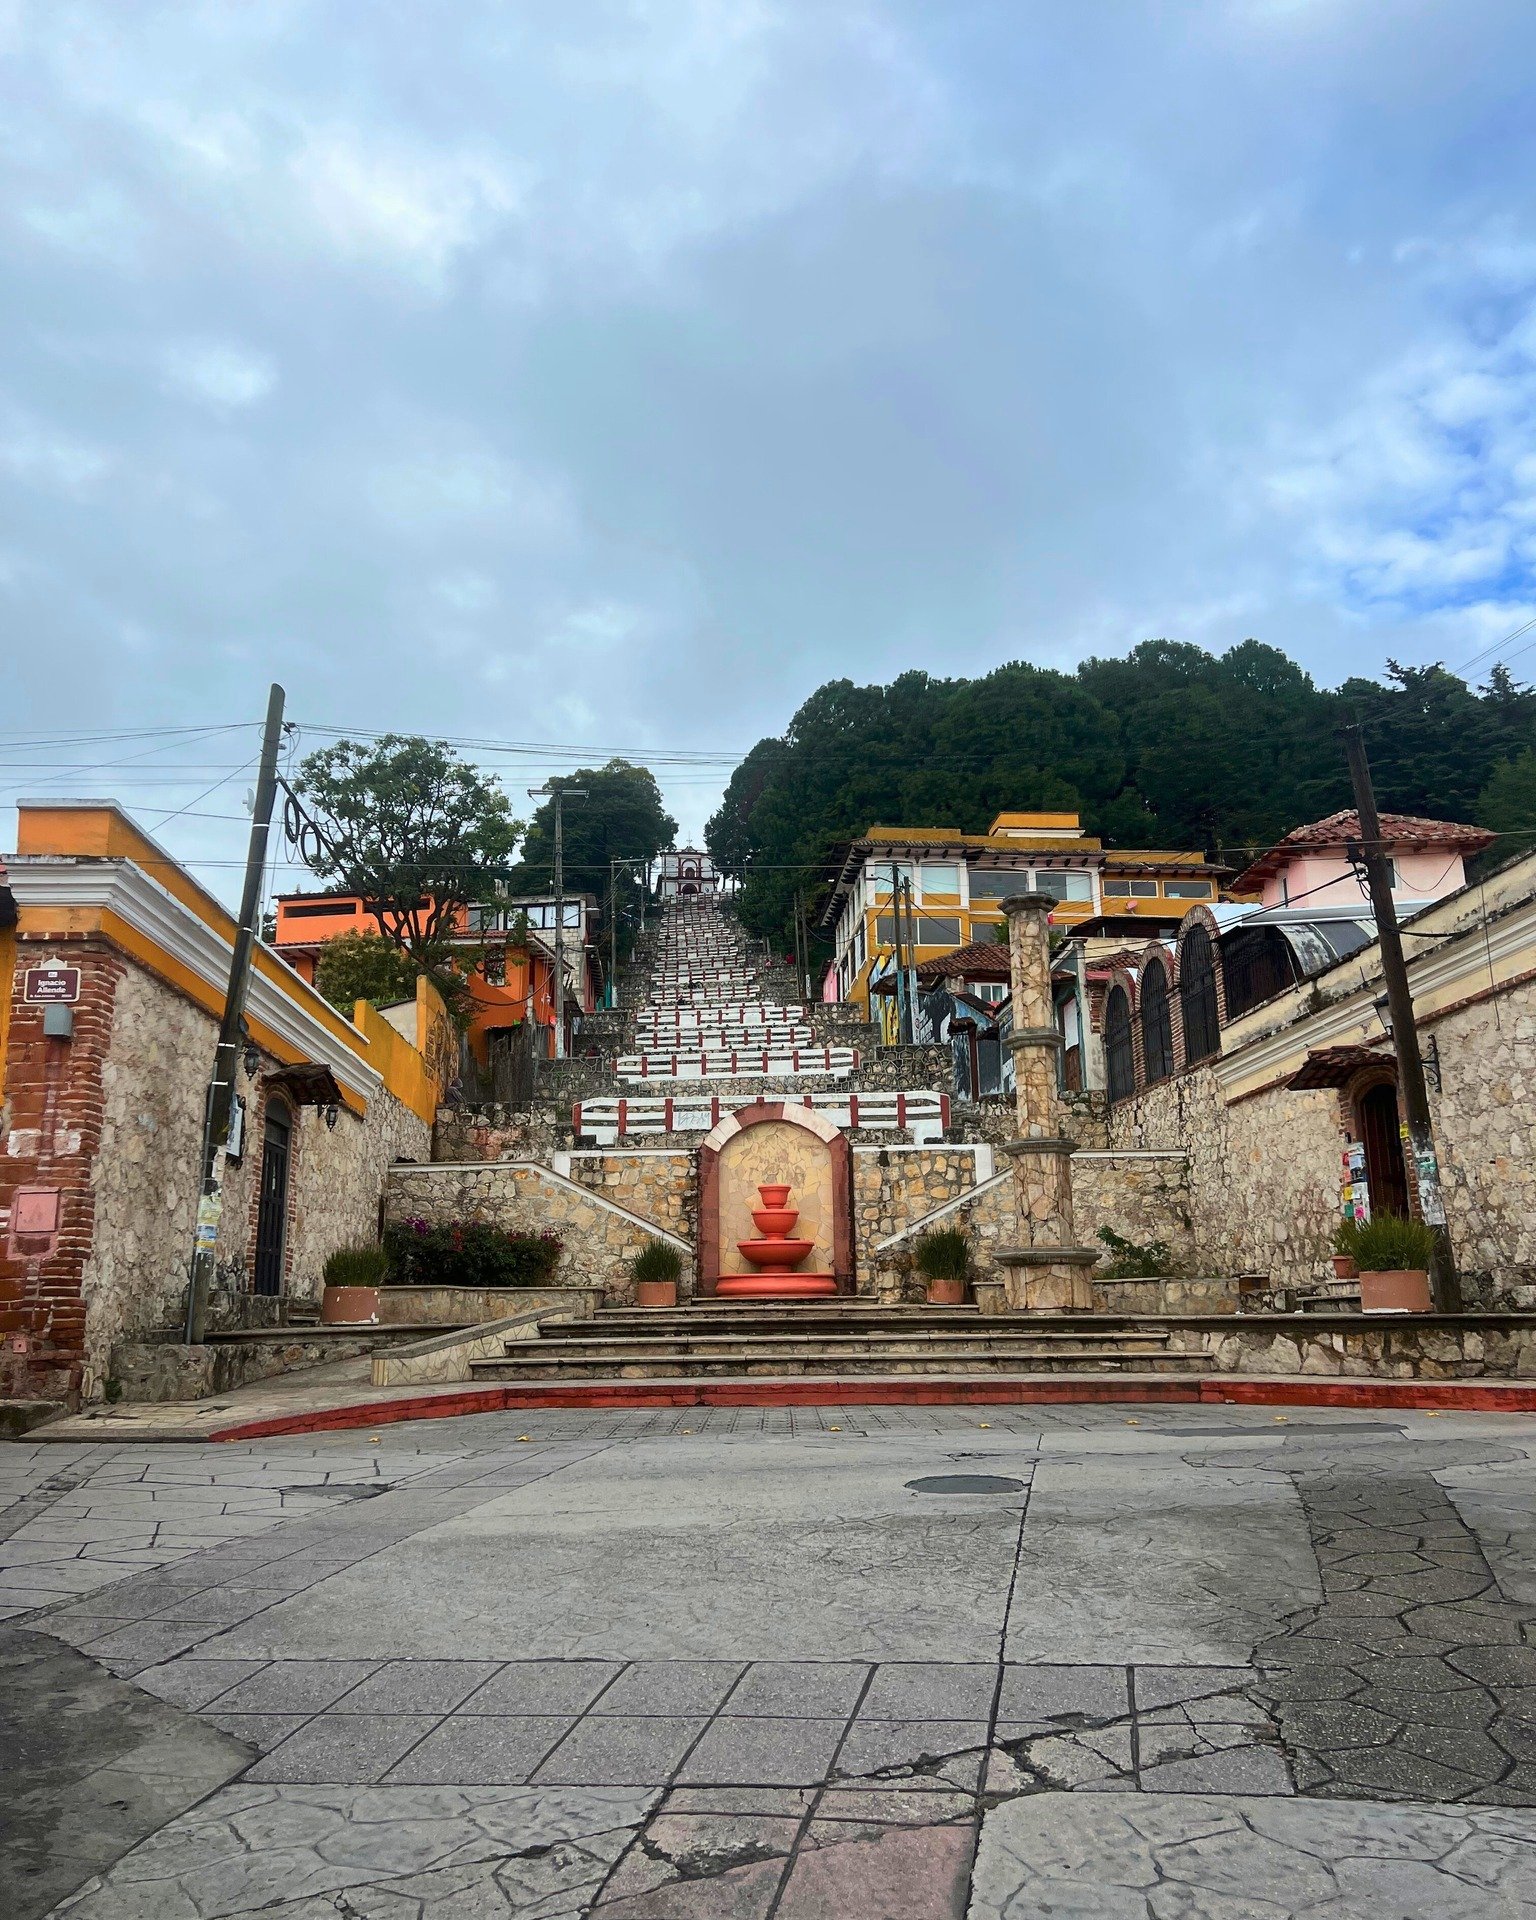 Cerro de San Cristobalito, SCDLC, Chiapas.
.
.
Foto: @anahop 

#SanCrist&oacute;bal #ConoceM&eacute;xico #DescubreM&eacute;xico ##SanCrist&oacute;bal #ConoceM&eacute;xico #DescubreM&eacute;xico ##enelcoraz&oacute;ndesancrist&oacute;balEnElCoraz&oacut